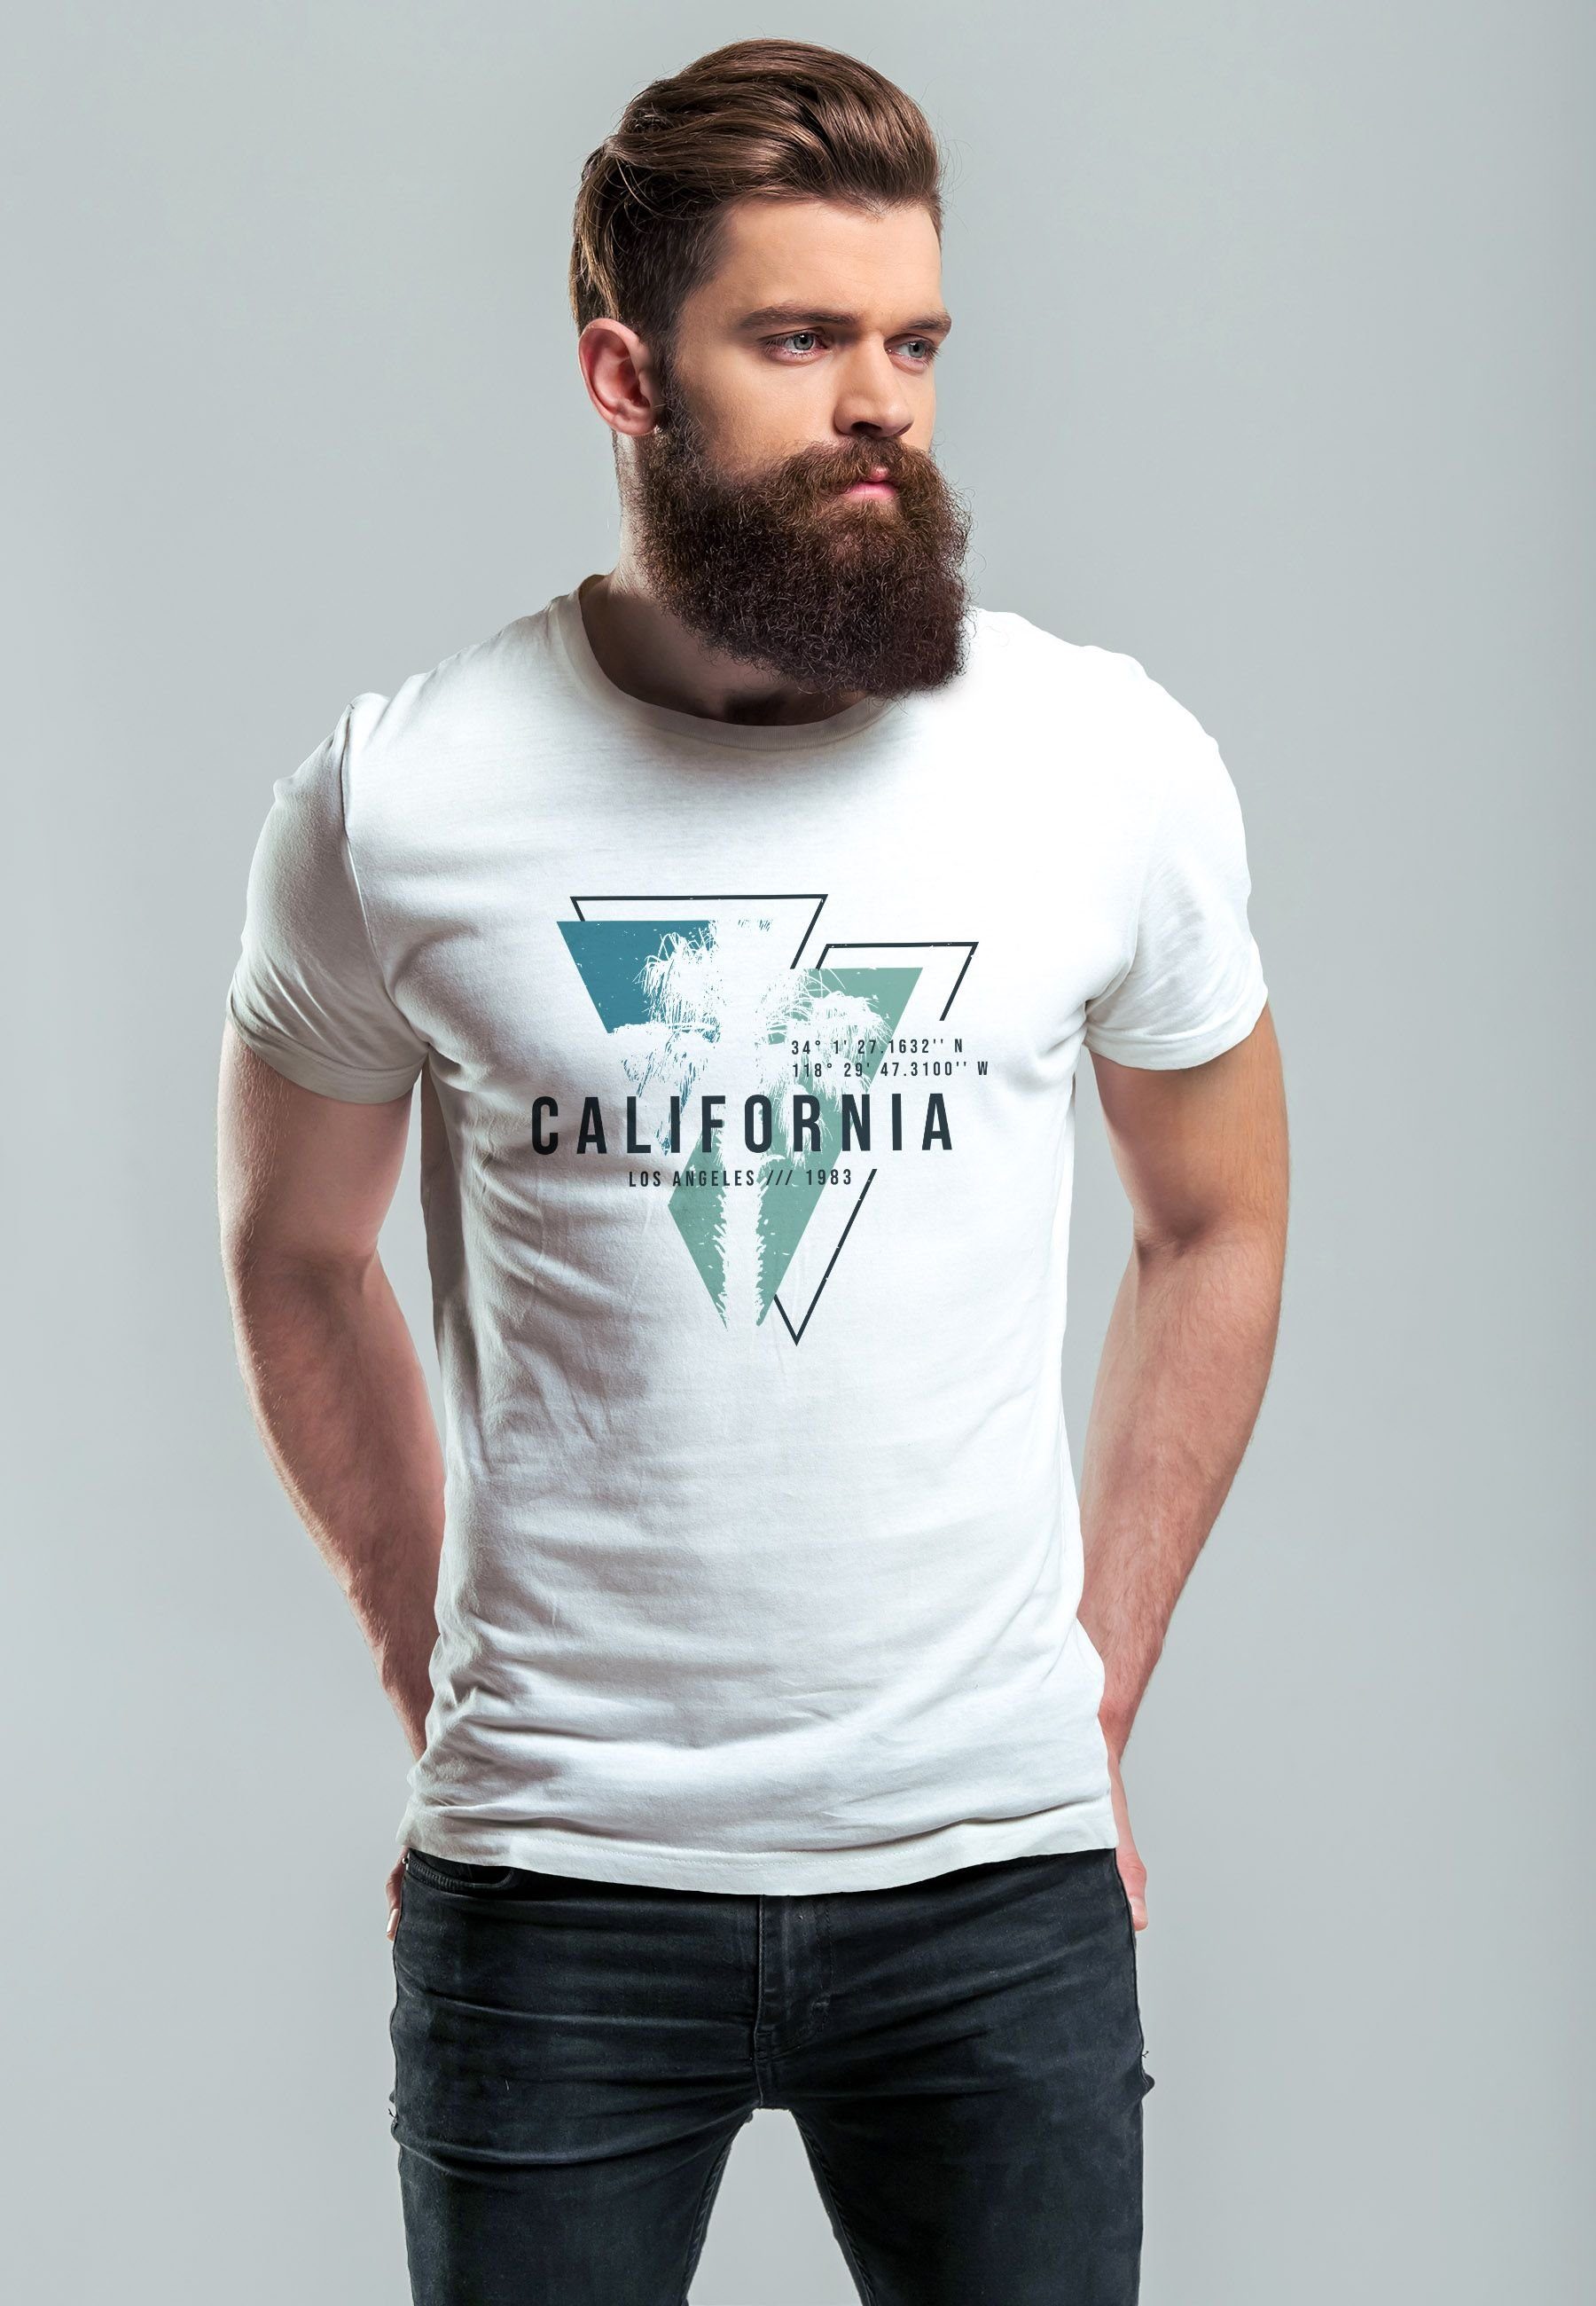 California Print-Shirt Surfing Neverless Fashion mit T-Shirt Herren Sommer Angeles weiß USA Motiv Print Los